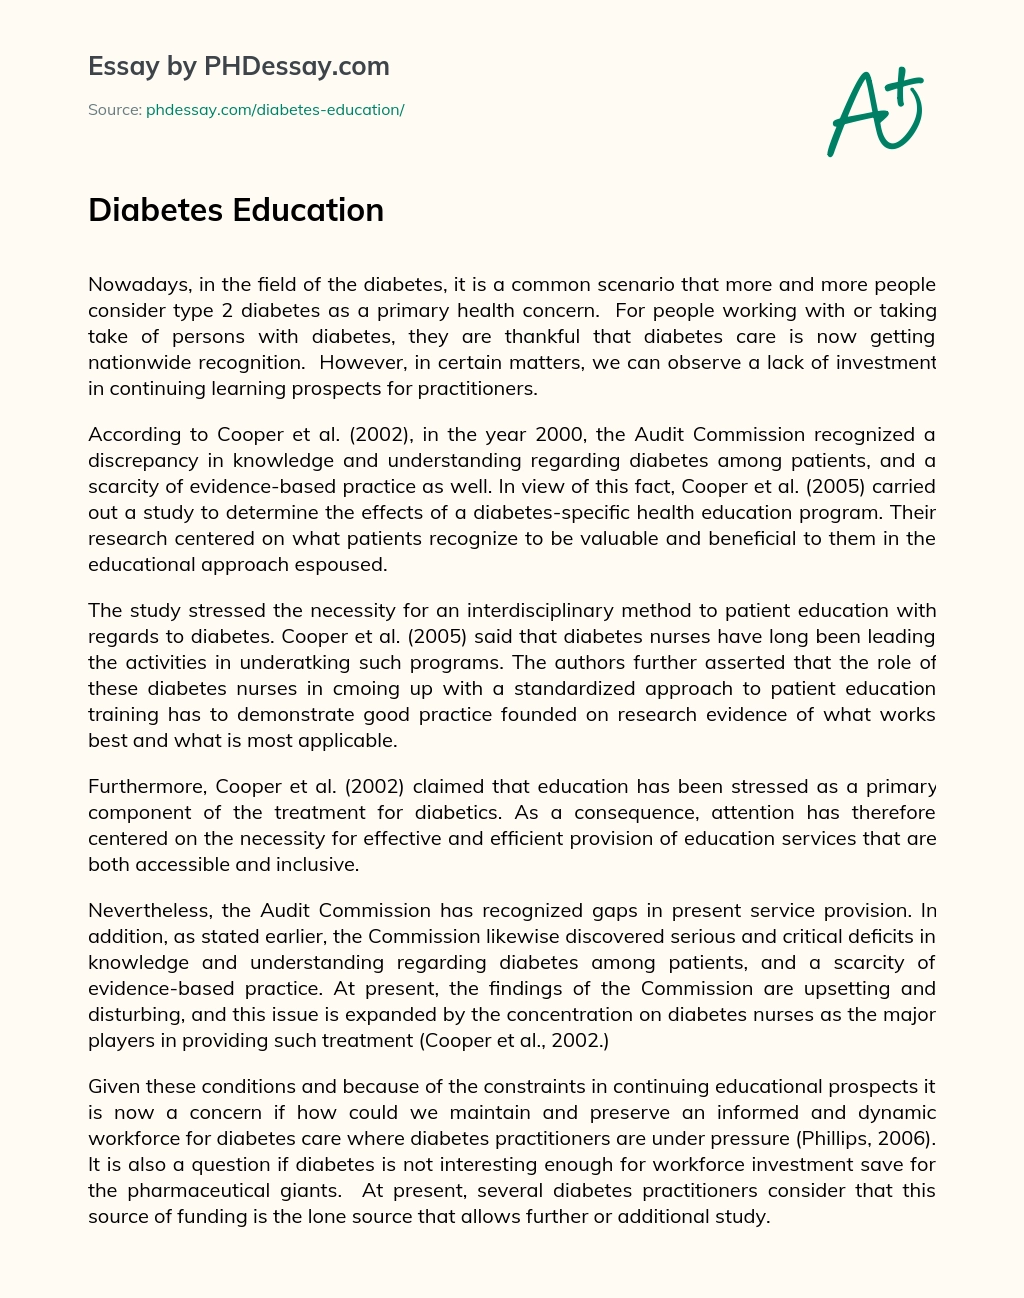 Diabetes Education essay